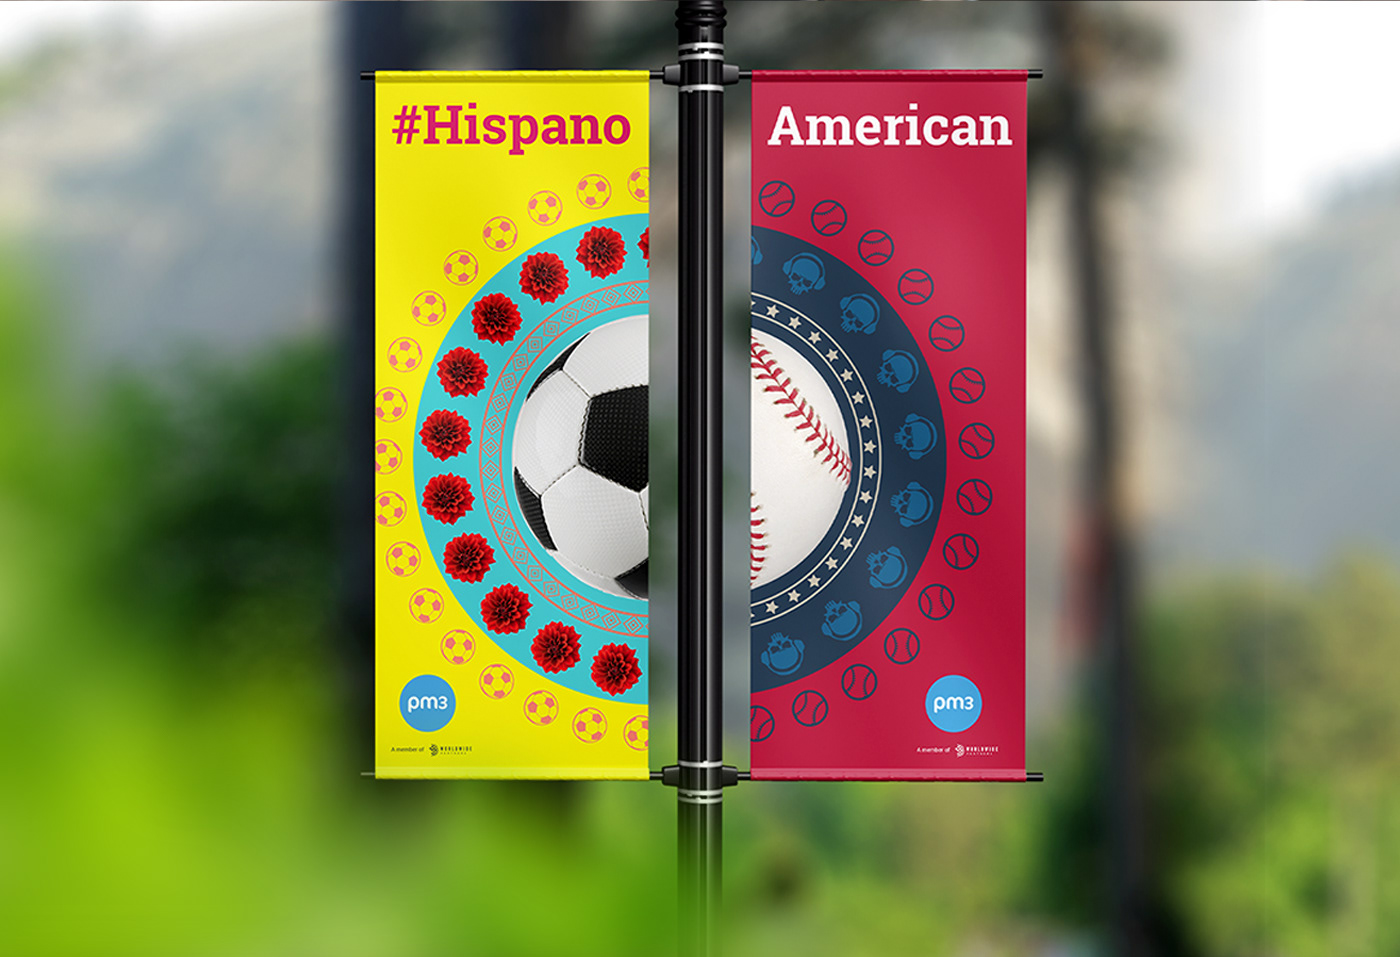 multicultural hispanic Advertising Agency colorful vibrant Fun branding  corporate image